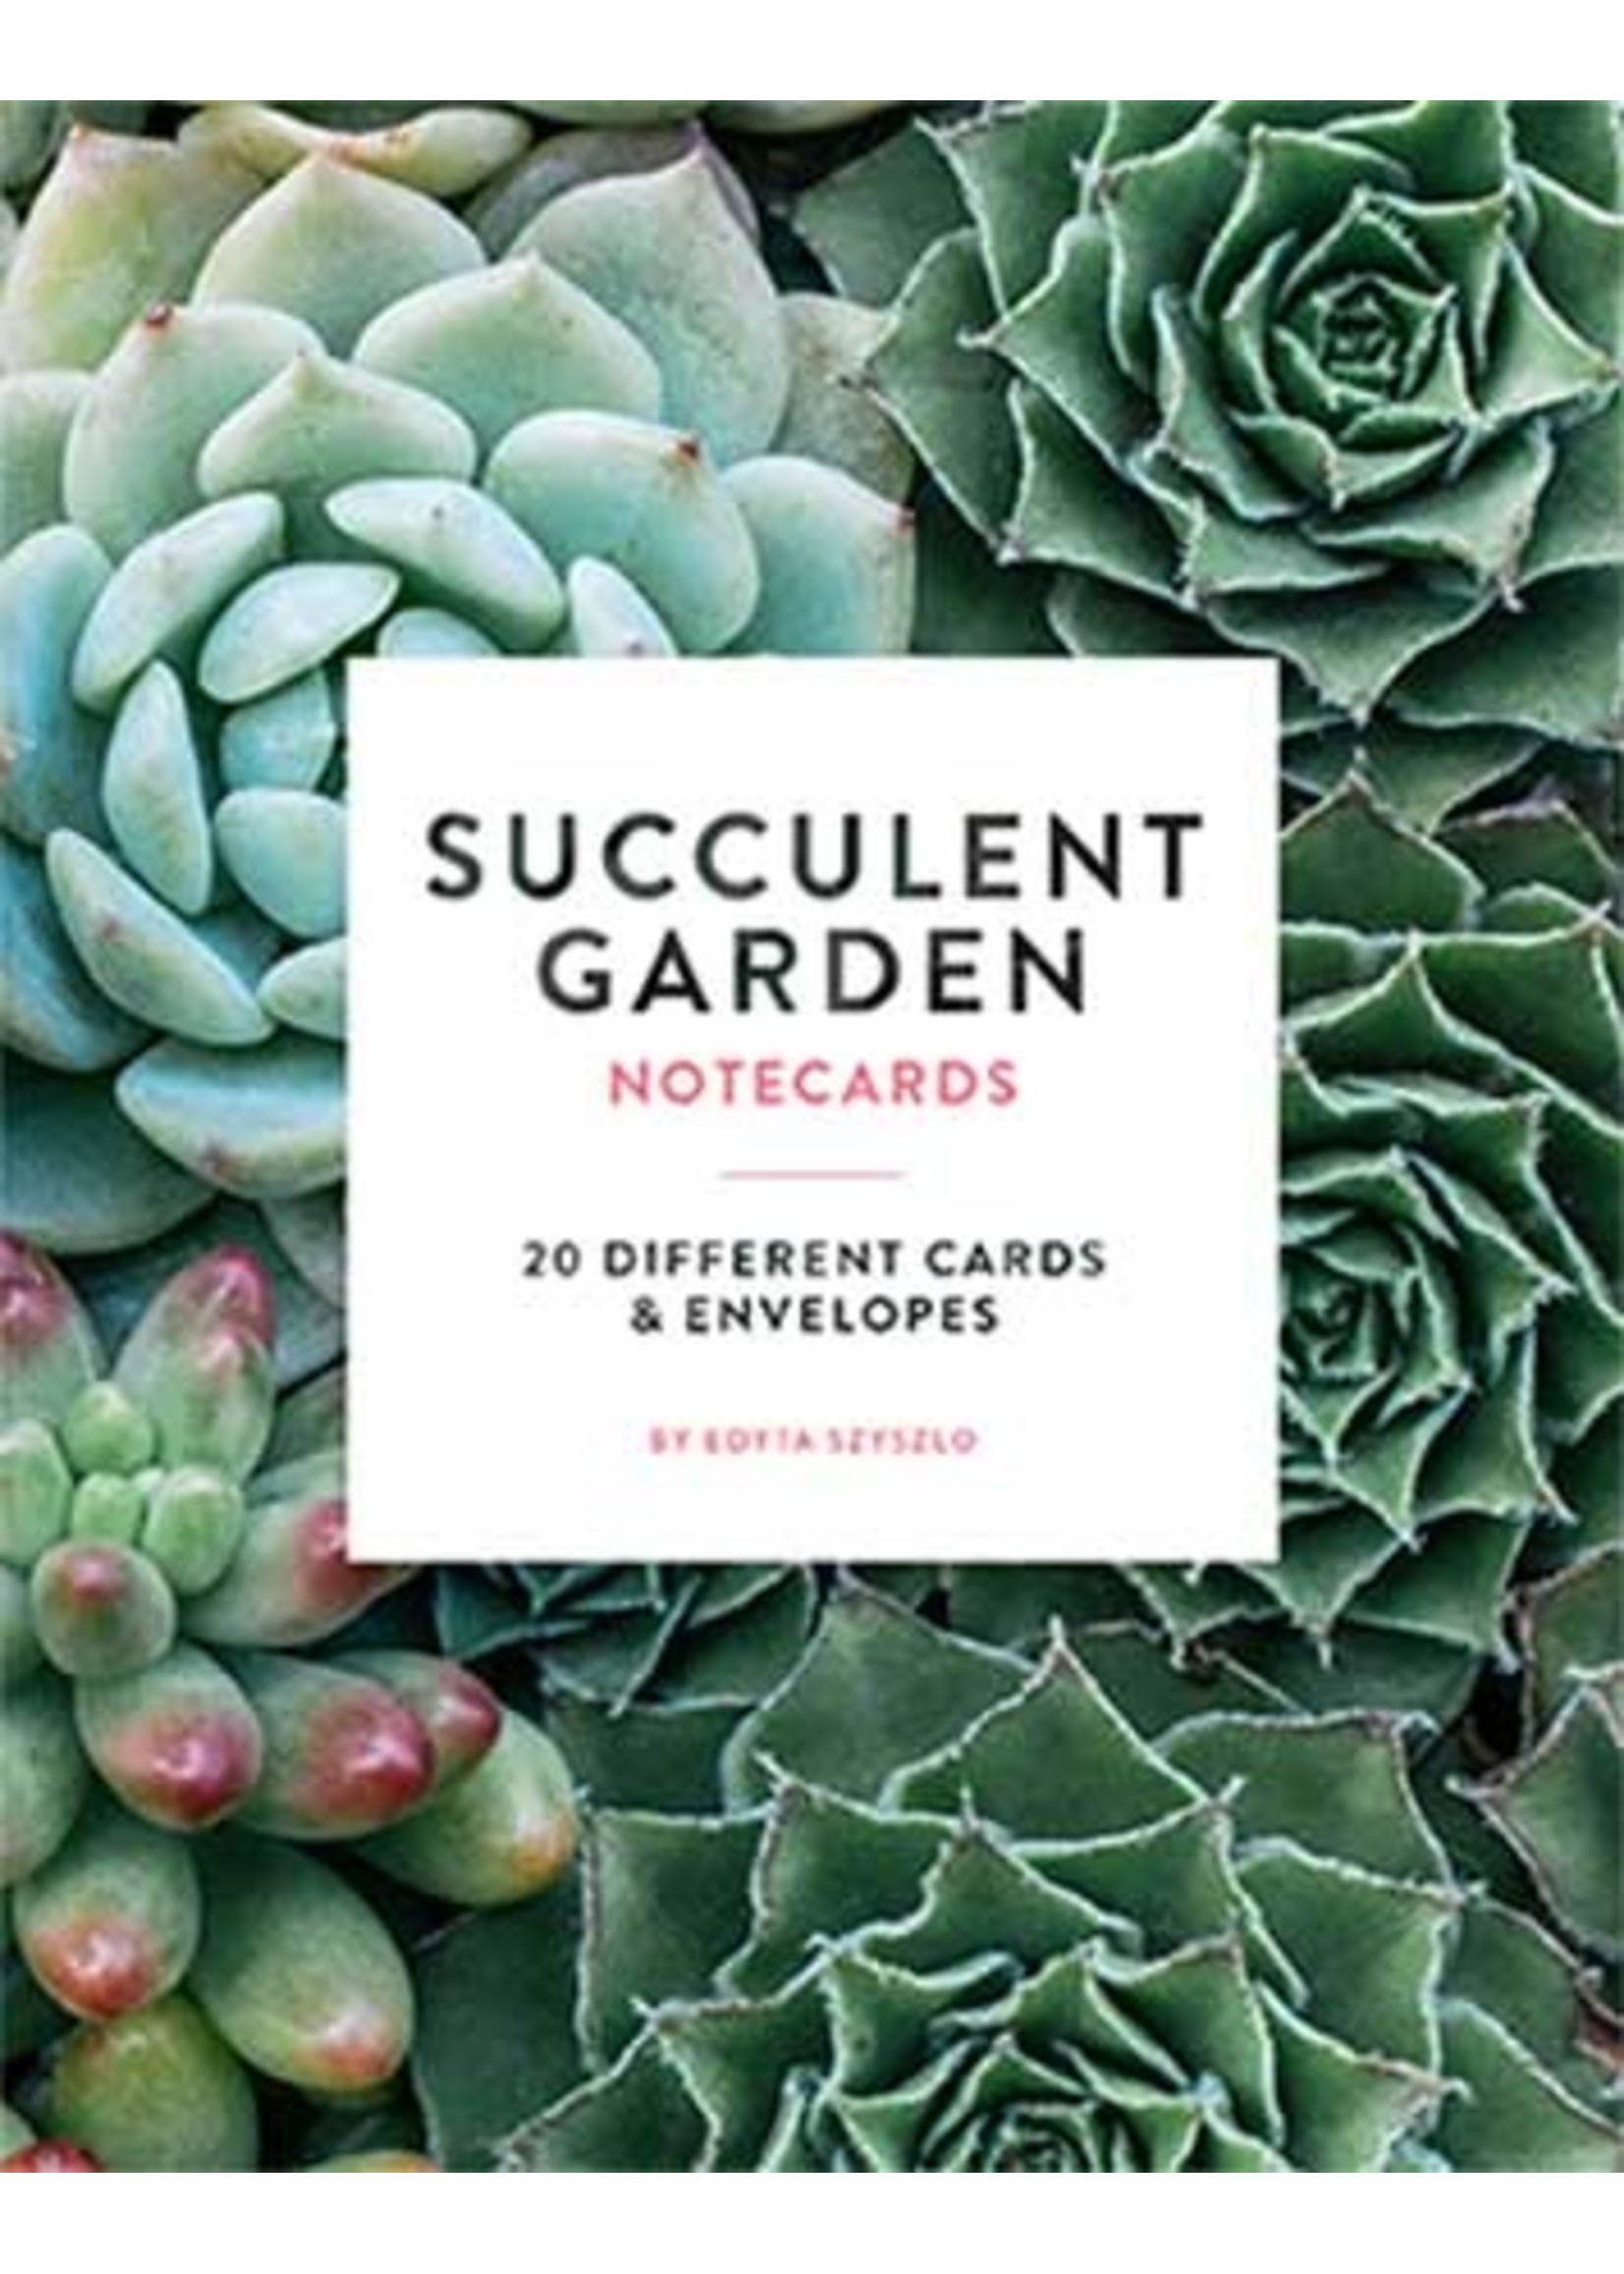 Succulent Garden Notecards: 20 Different Cards & Envelopes by Edyta Szyszlo